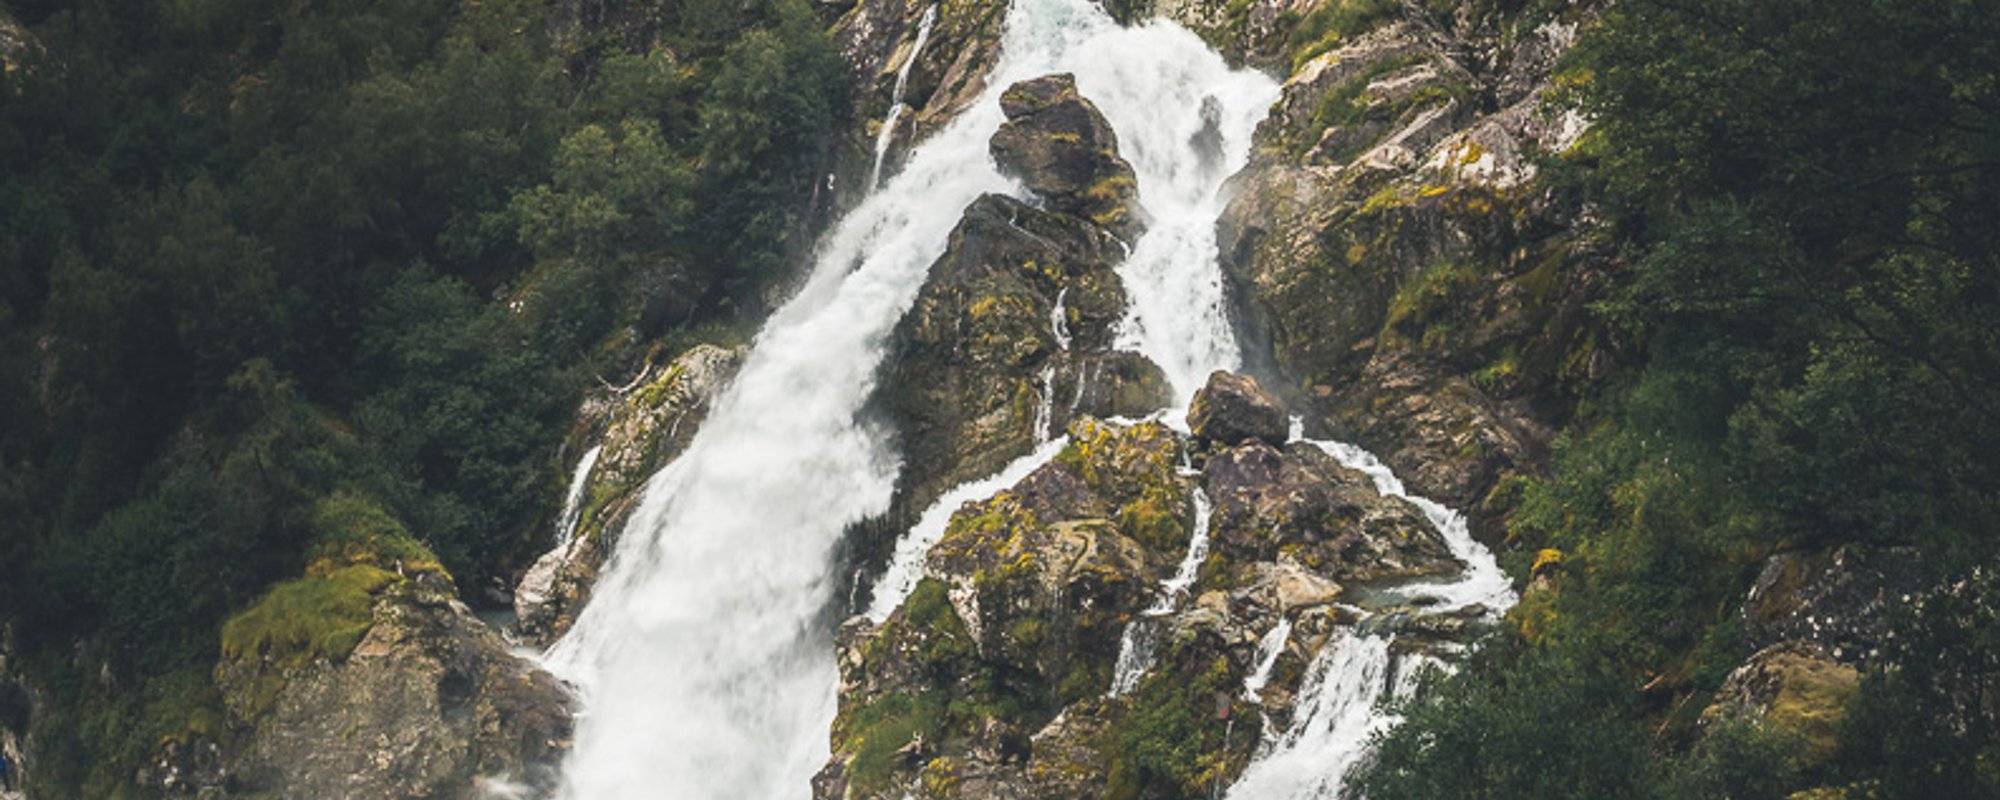 Norwegian nature: Kleivafossen waterfall